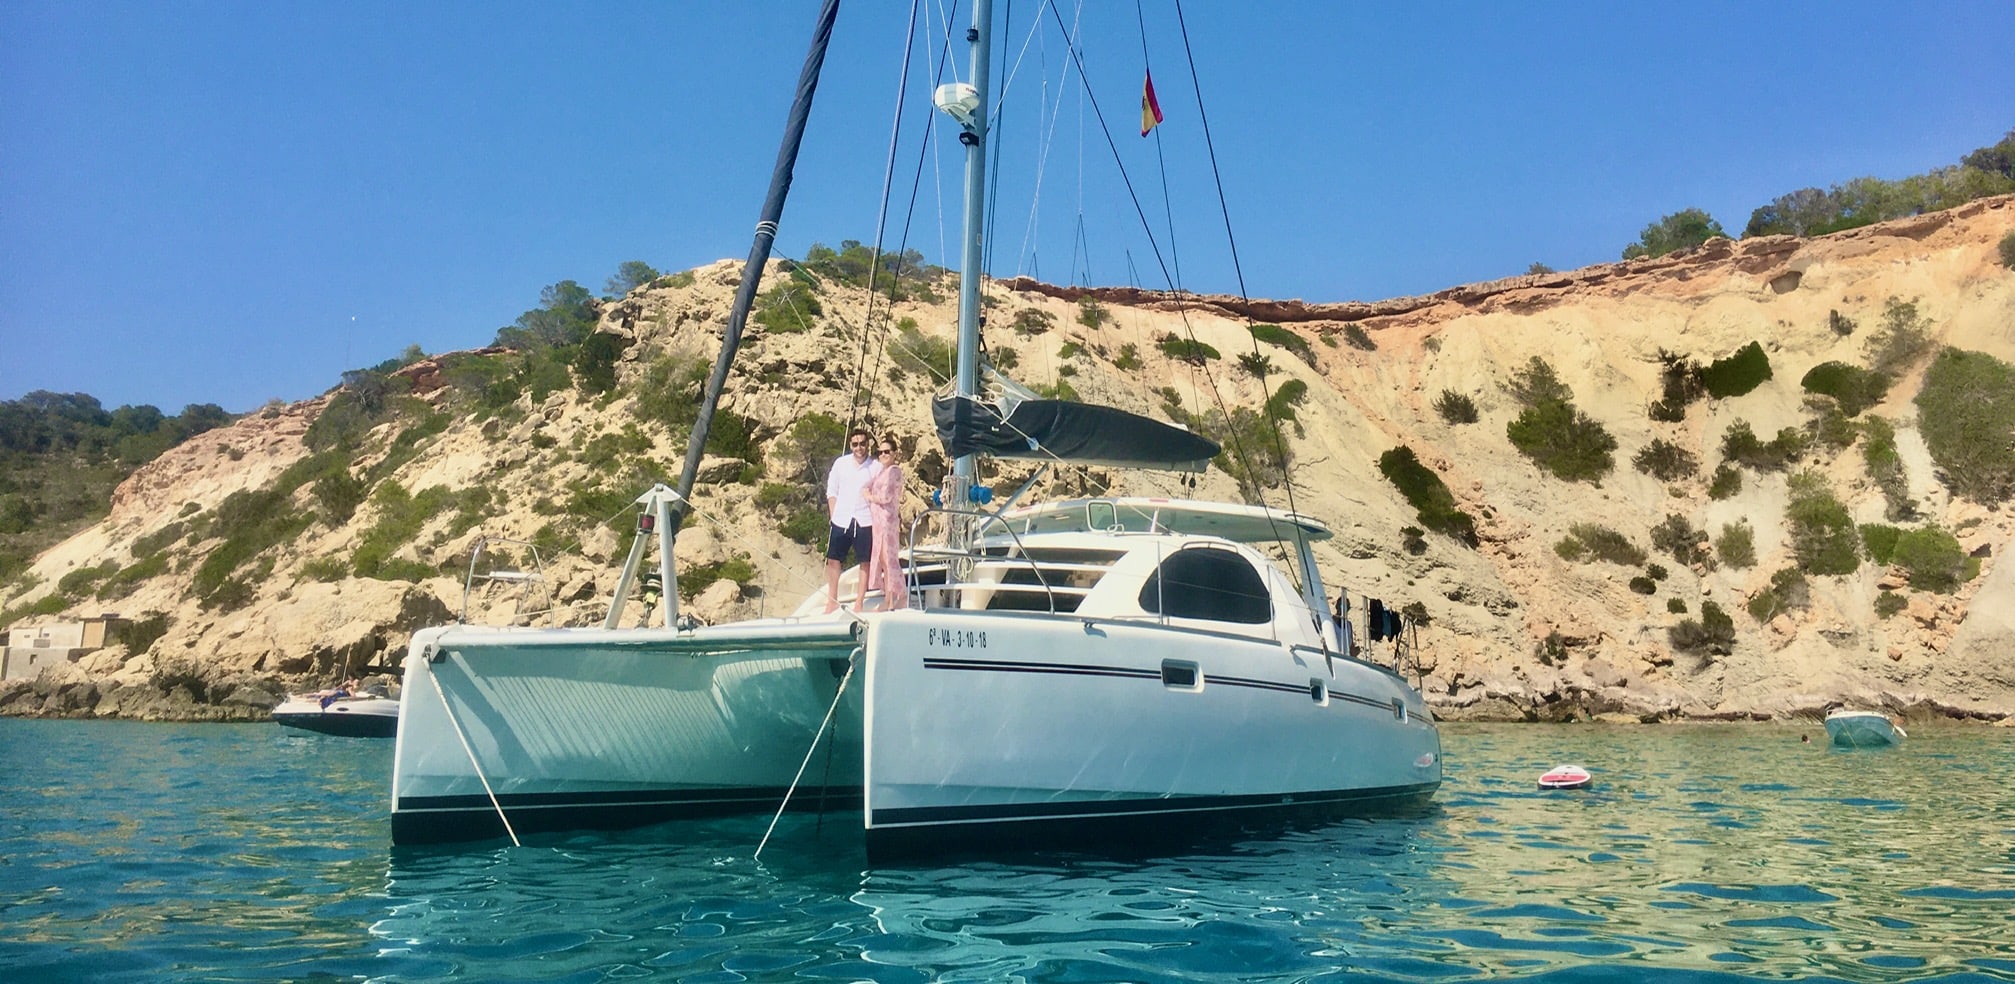 Ibiza Boat rental - couple on board 